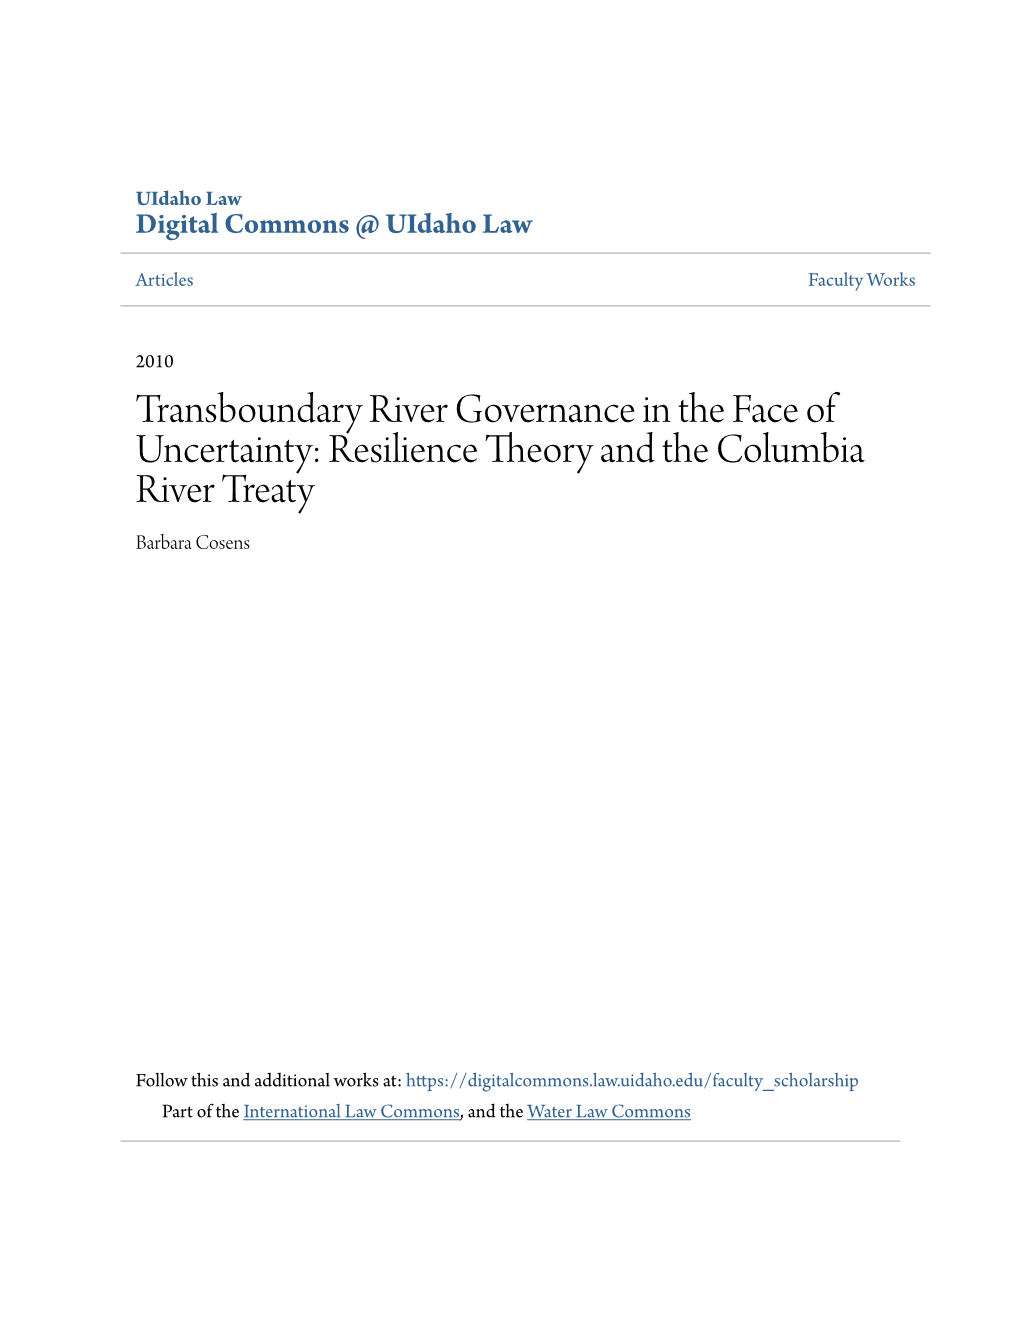 Resilience Theory and the Columbia River Treaty Barbara Cosens